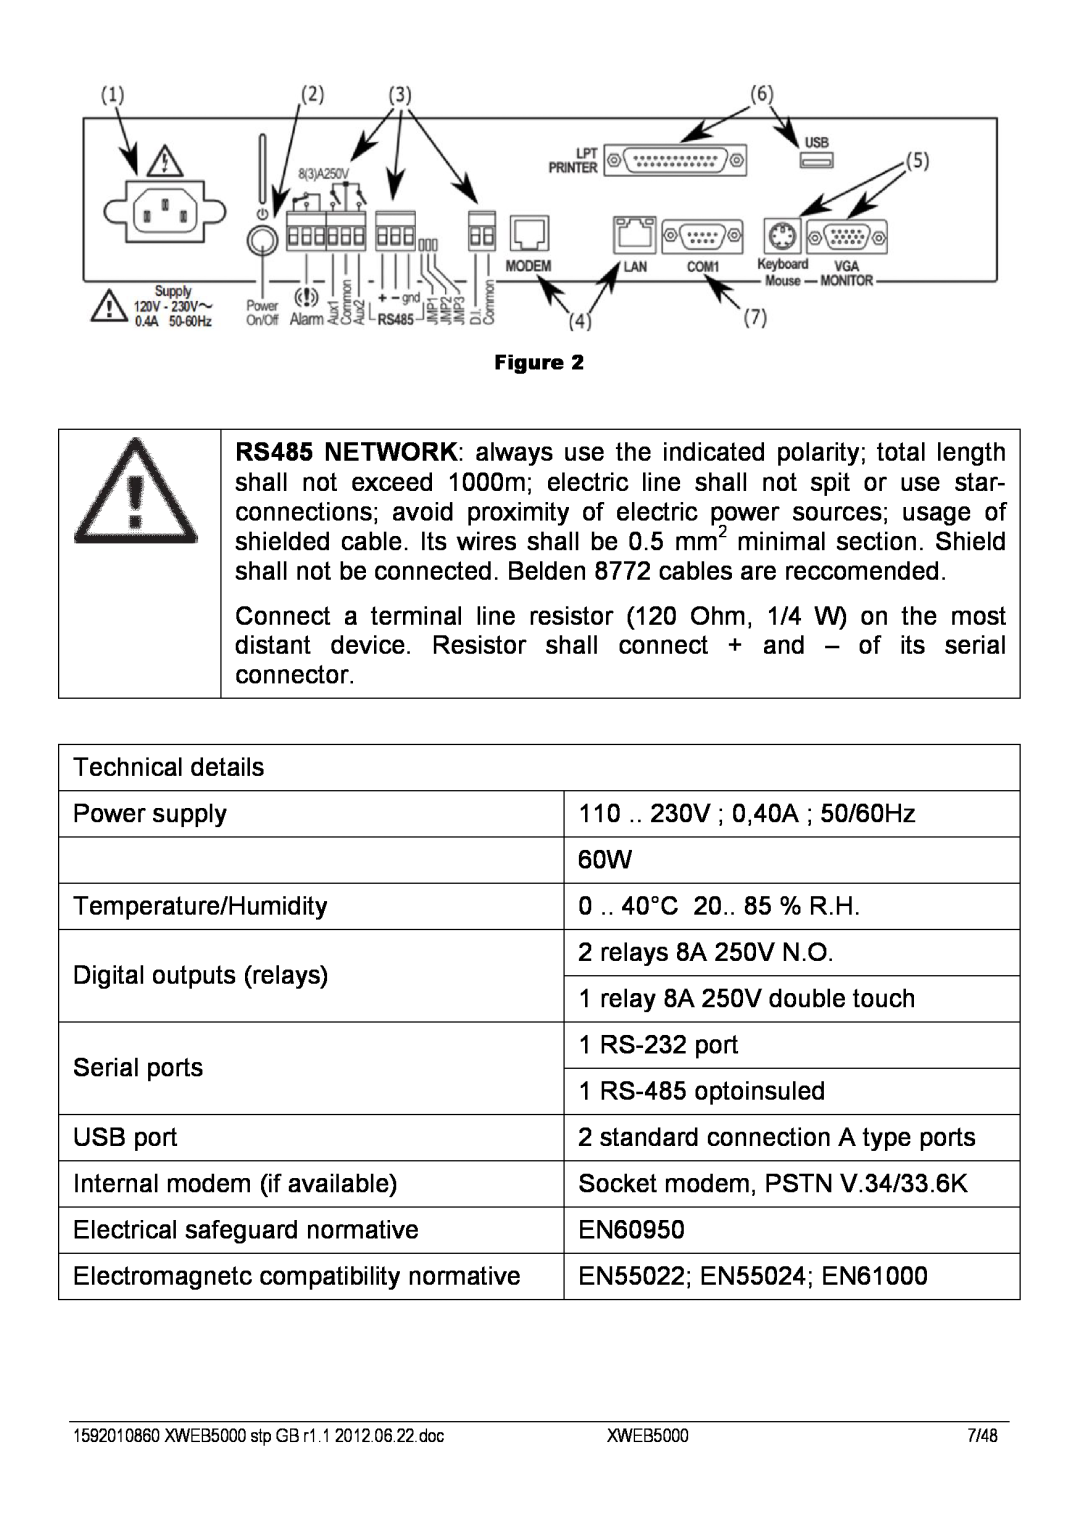 Emerson XWEB5000 manual Technical details 